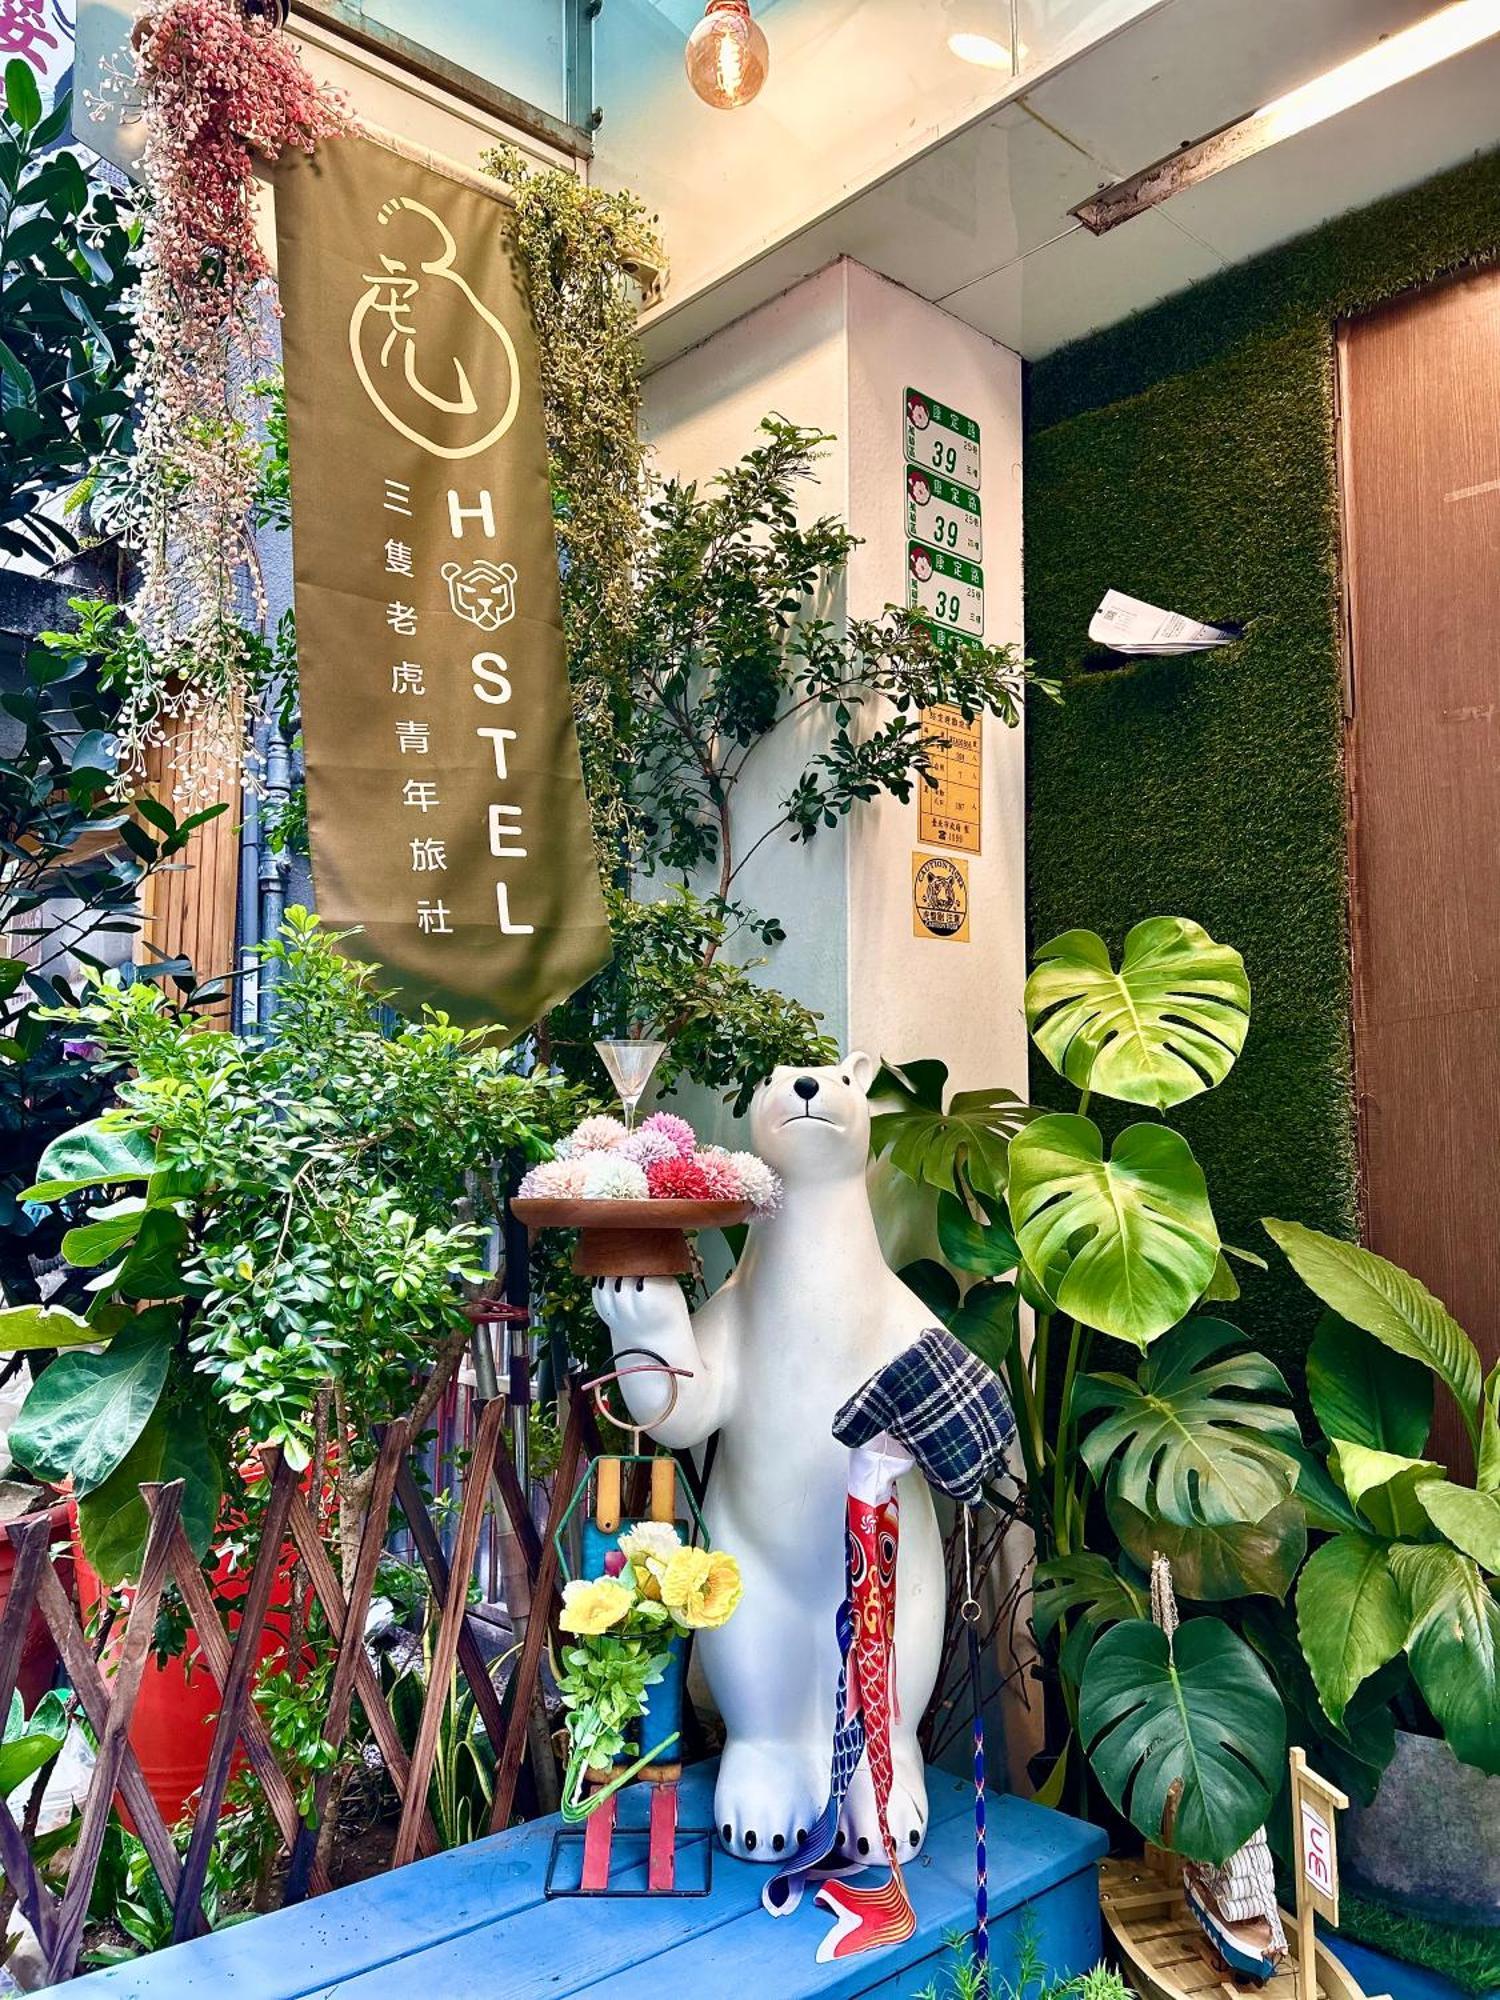 Taipei Triple Tiger Inn エクステリア 写真